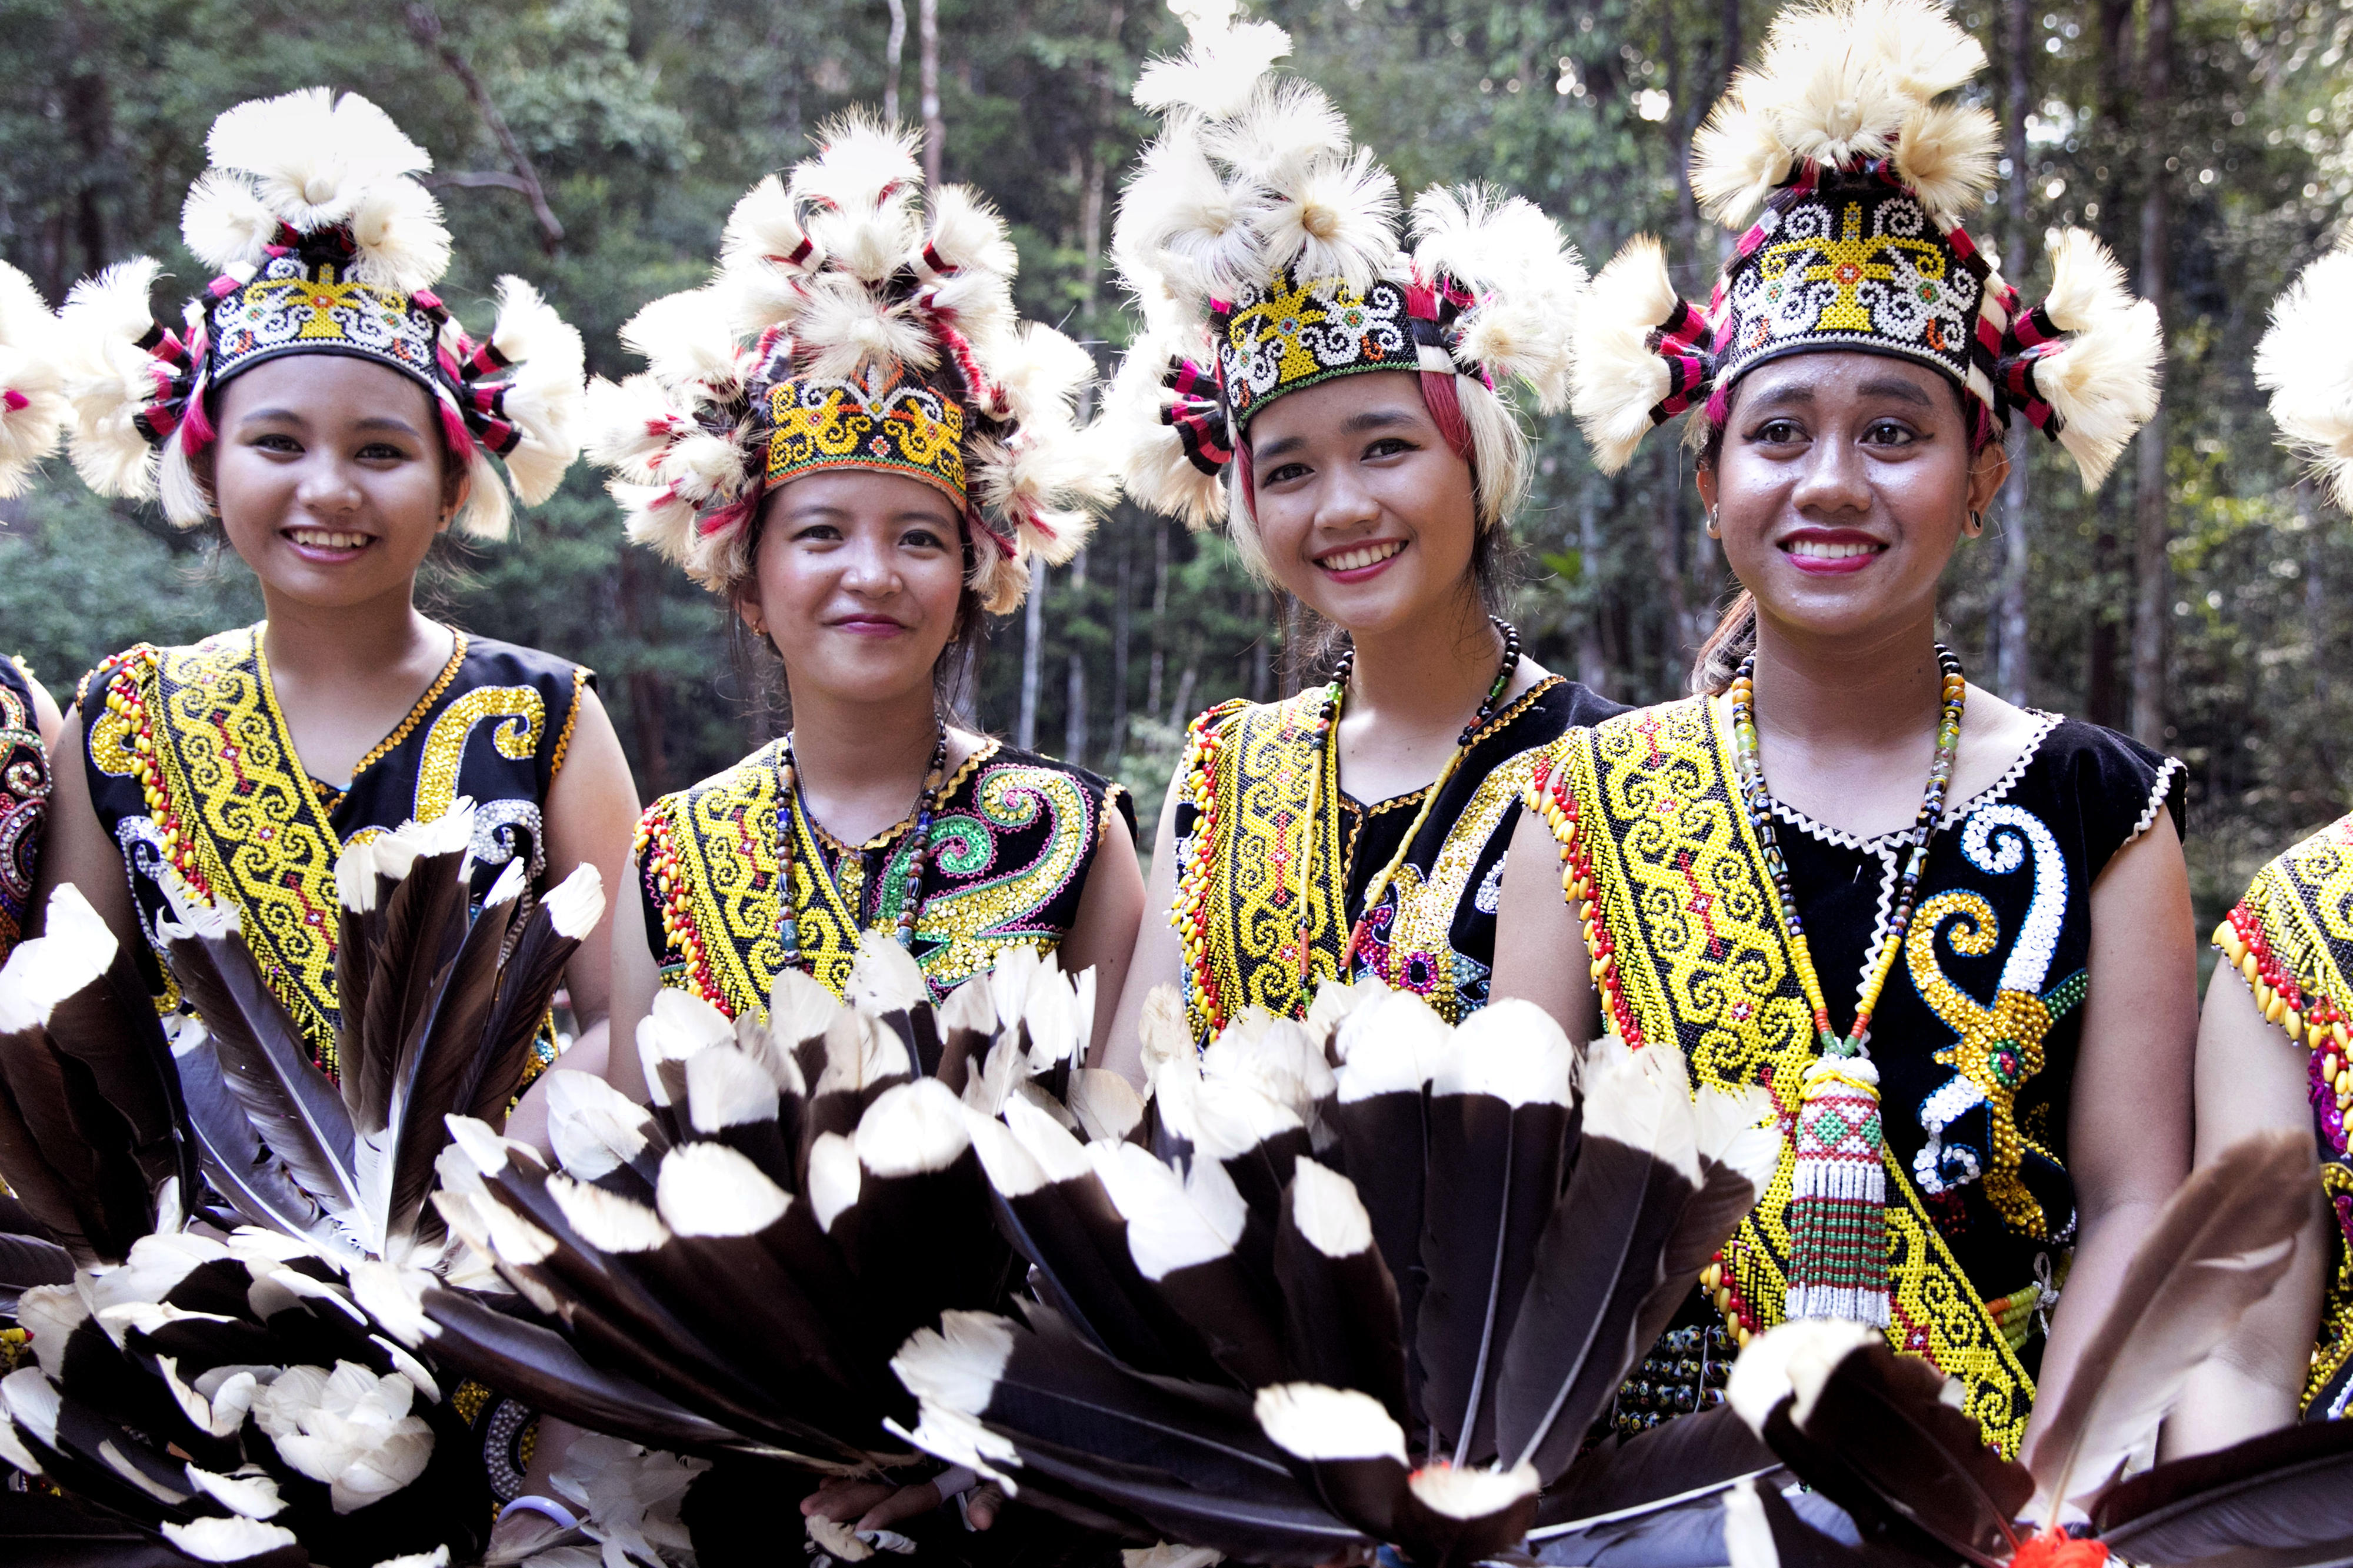 Dancers in traditional costume in Borneo